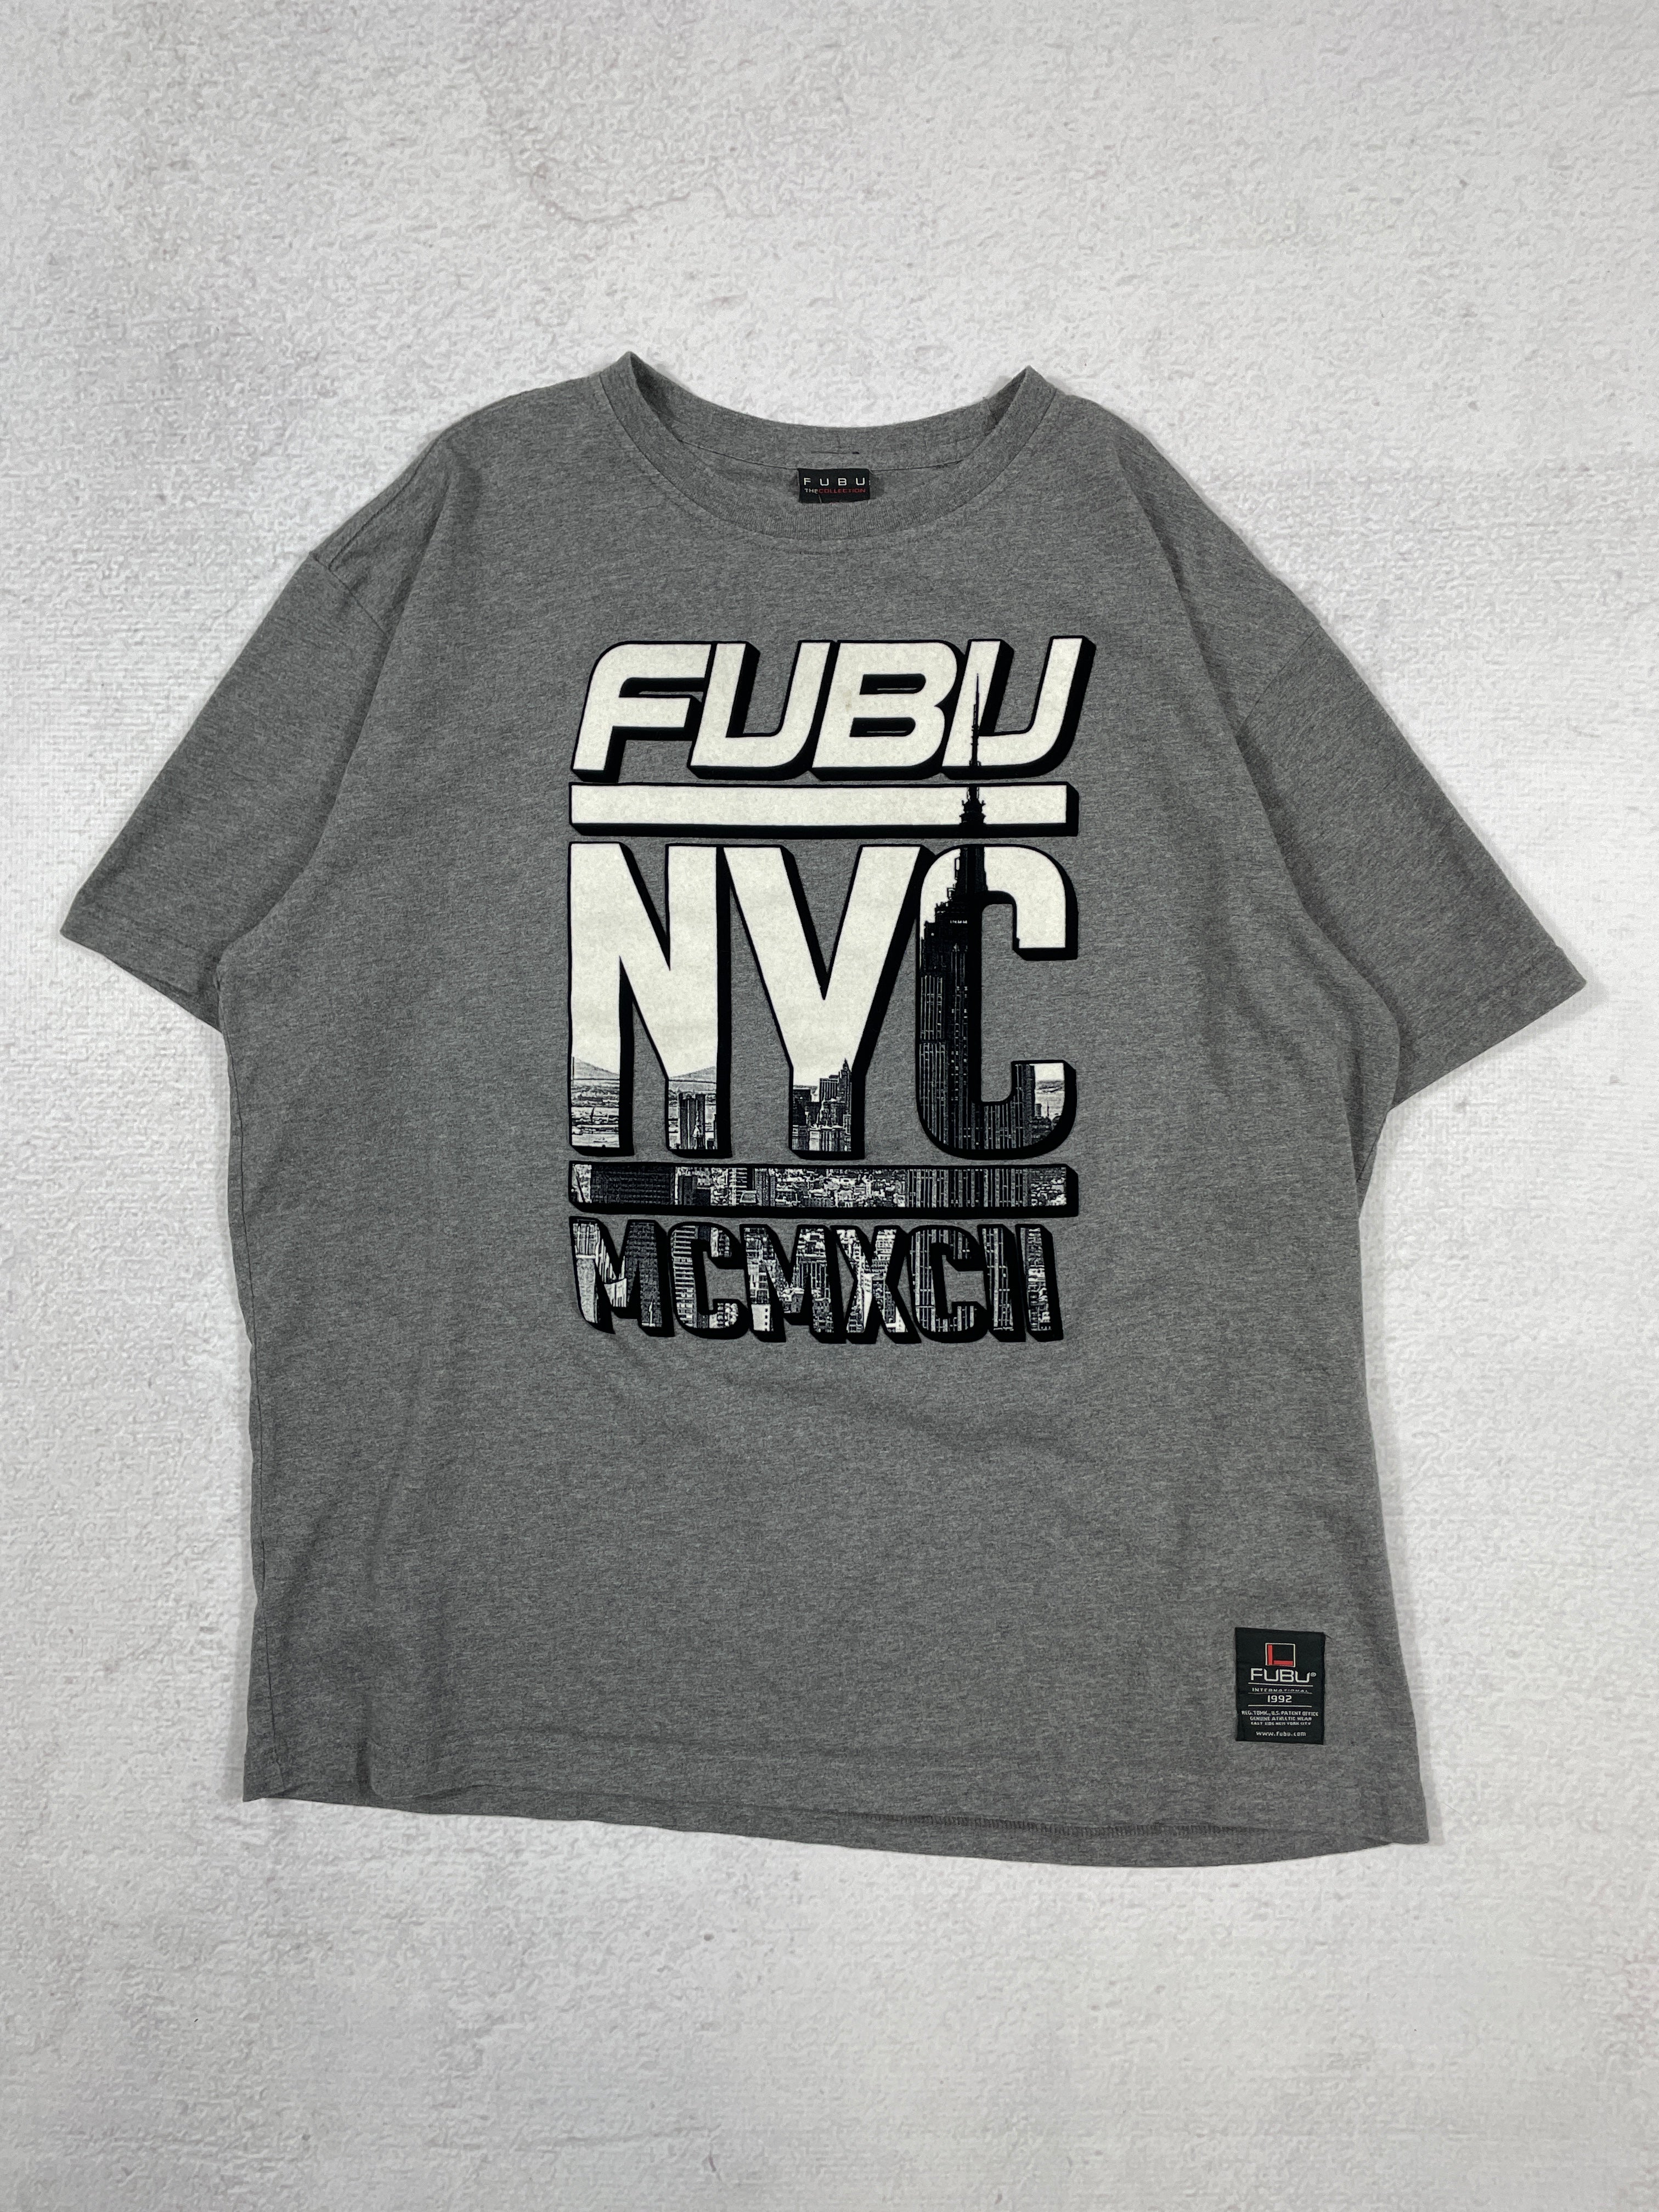 Vintage Fubu NYC T-Shirt - Men's Medium